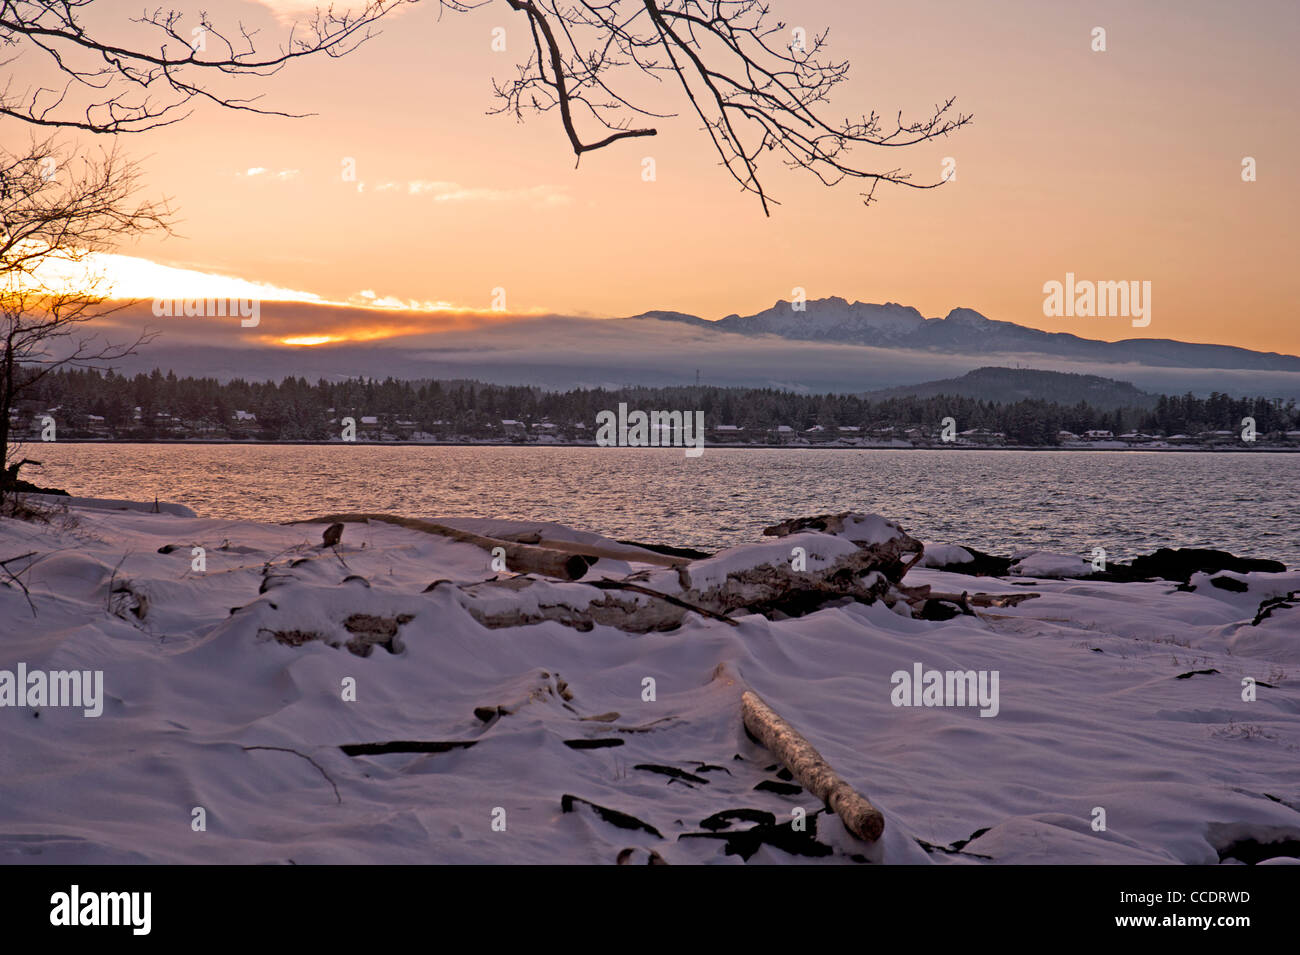 Abendsonne über Mount Arrowsmith auf Vancouver Island, British Columbia. Kanada.  SCO 7833. Stockfoto